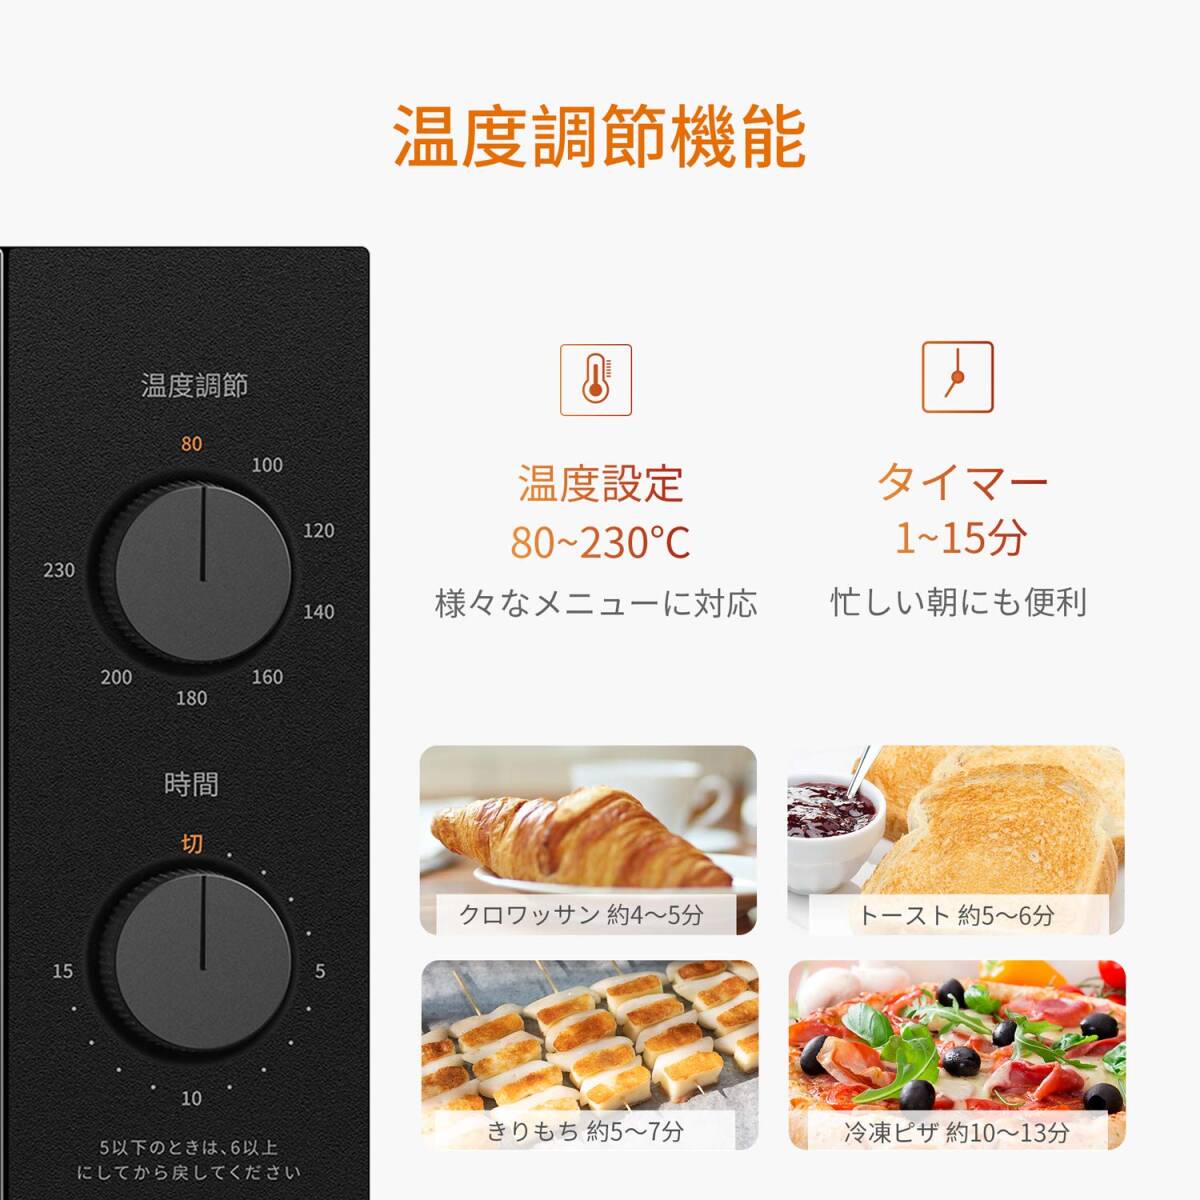 COMFEE' オーブントースター 4枚焼き トースト 12L 広い庫内 タイマー設定 無段階 温度調節 1200W 上下 4本ヒーター トレー_画像4